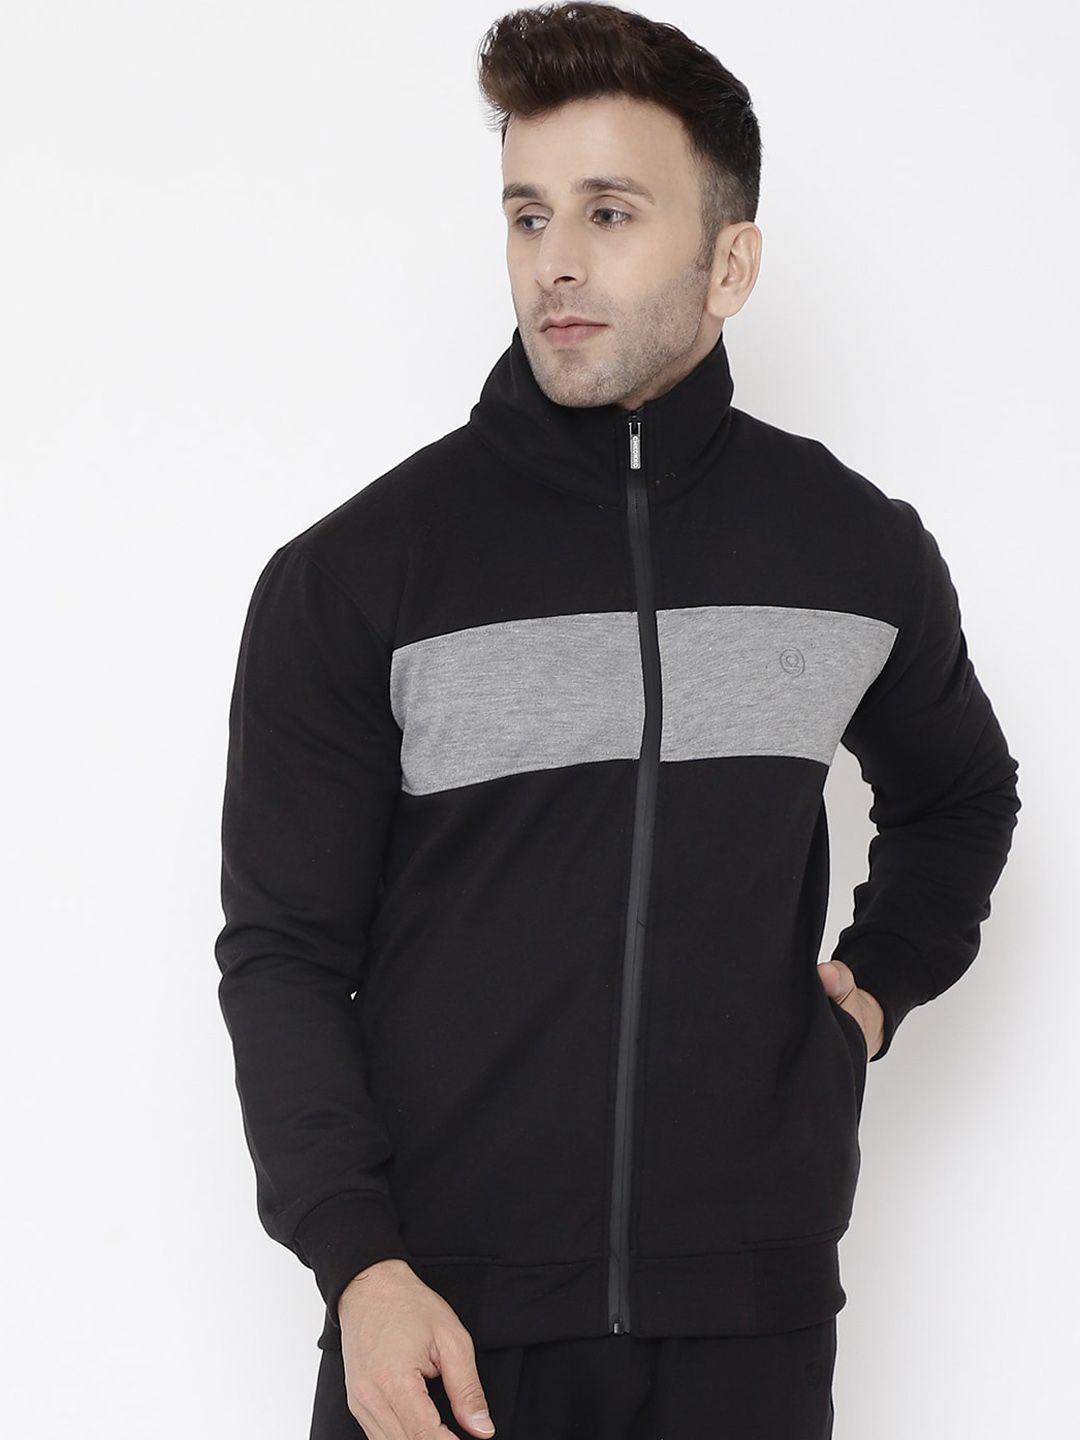 chkokko men black & grey colourblocked outdoor sporty jacket